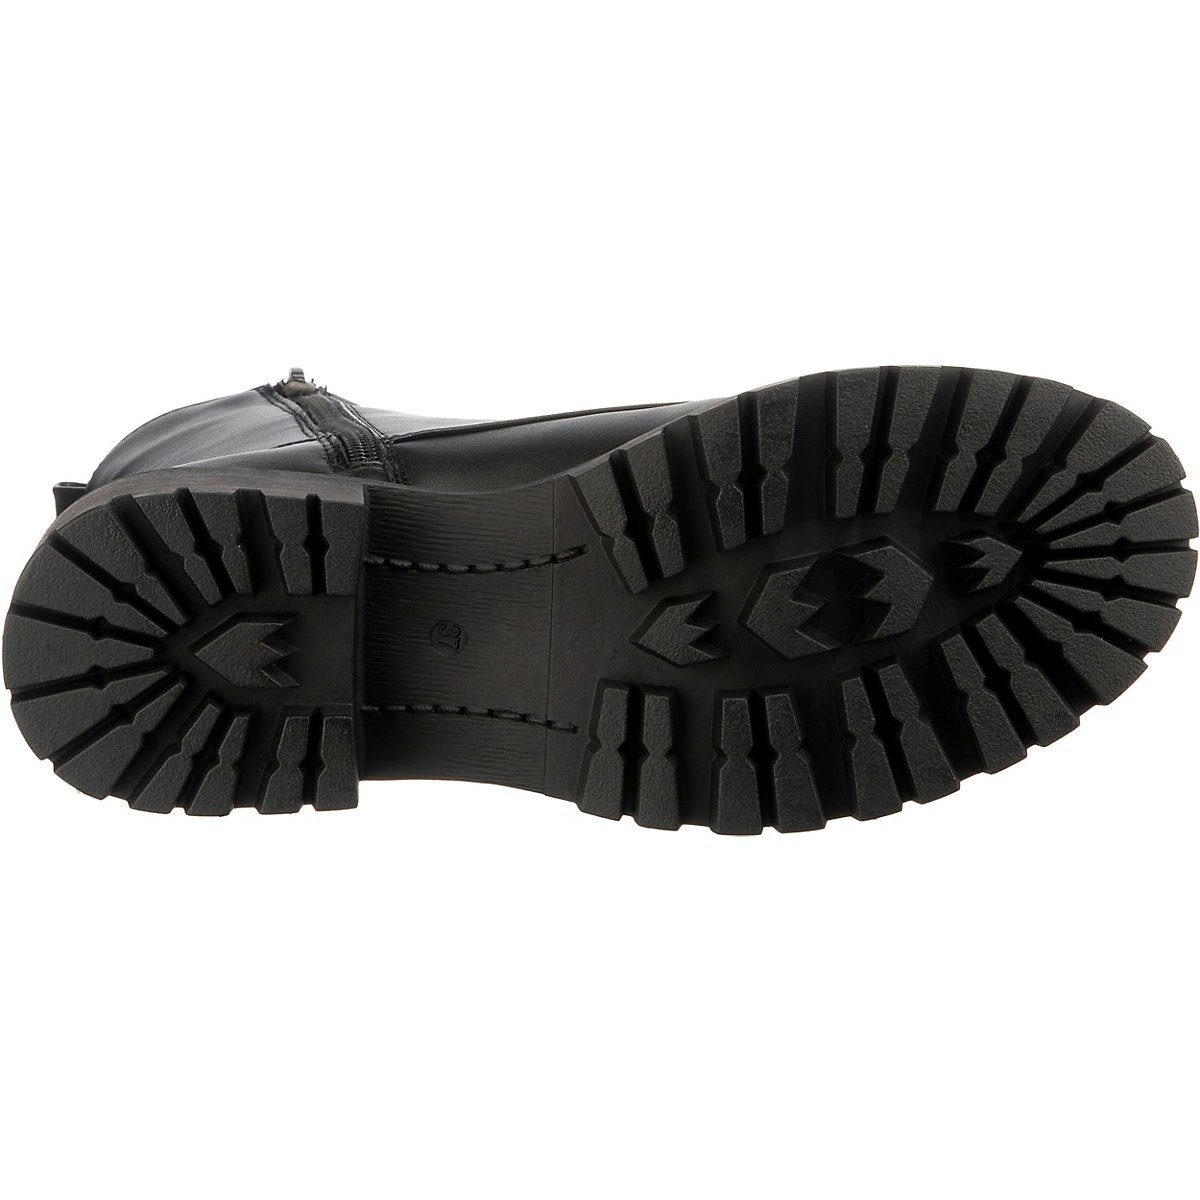 Schuhe Stiefeletten ambellis Verstärkte Schnürstiefeletten mit Anziehschlaufe Schnürstiefelette